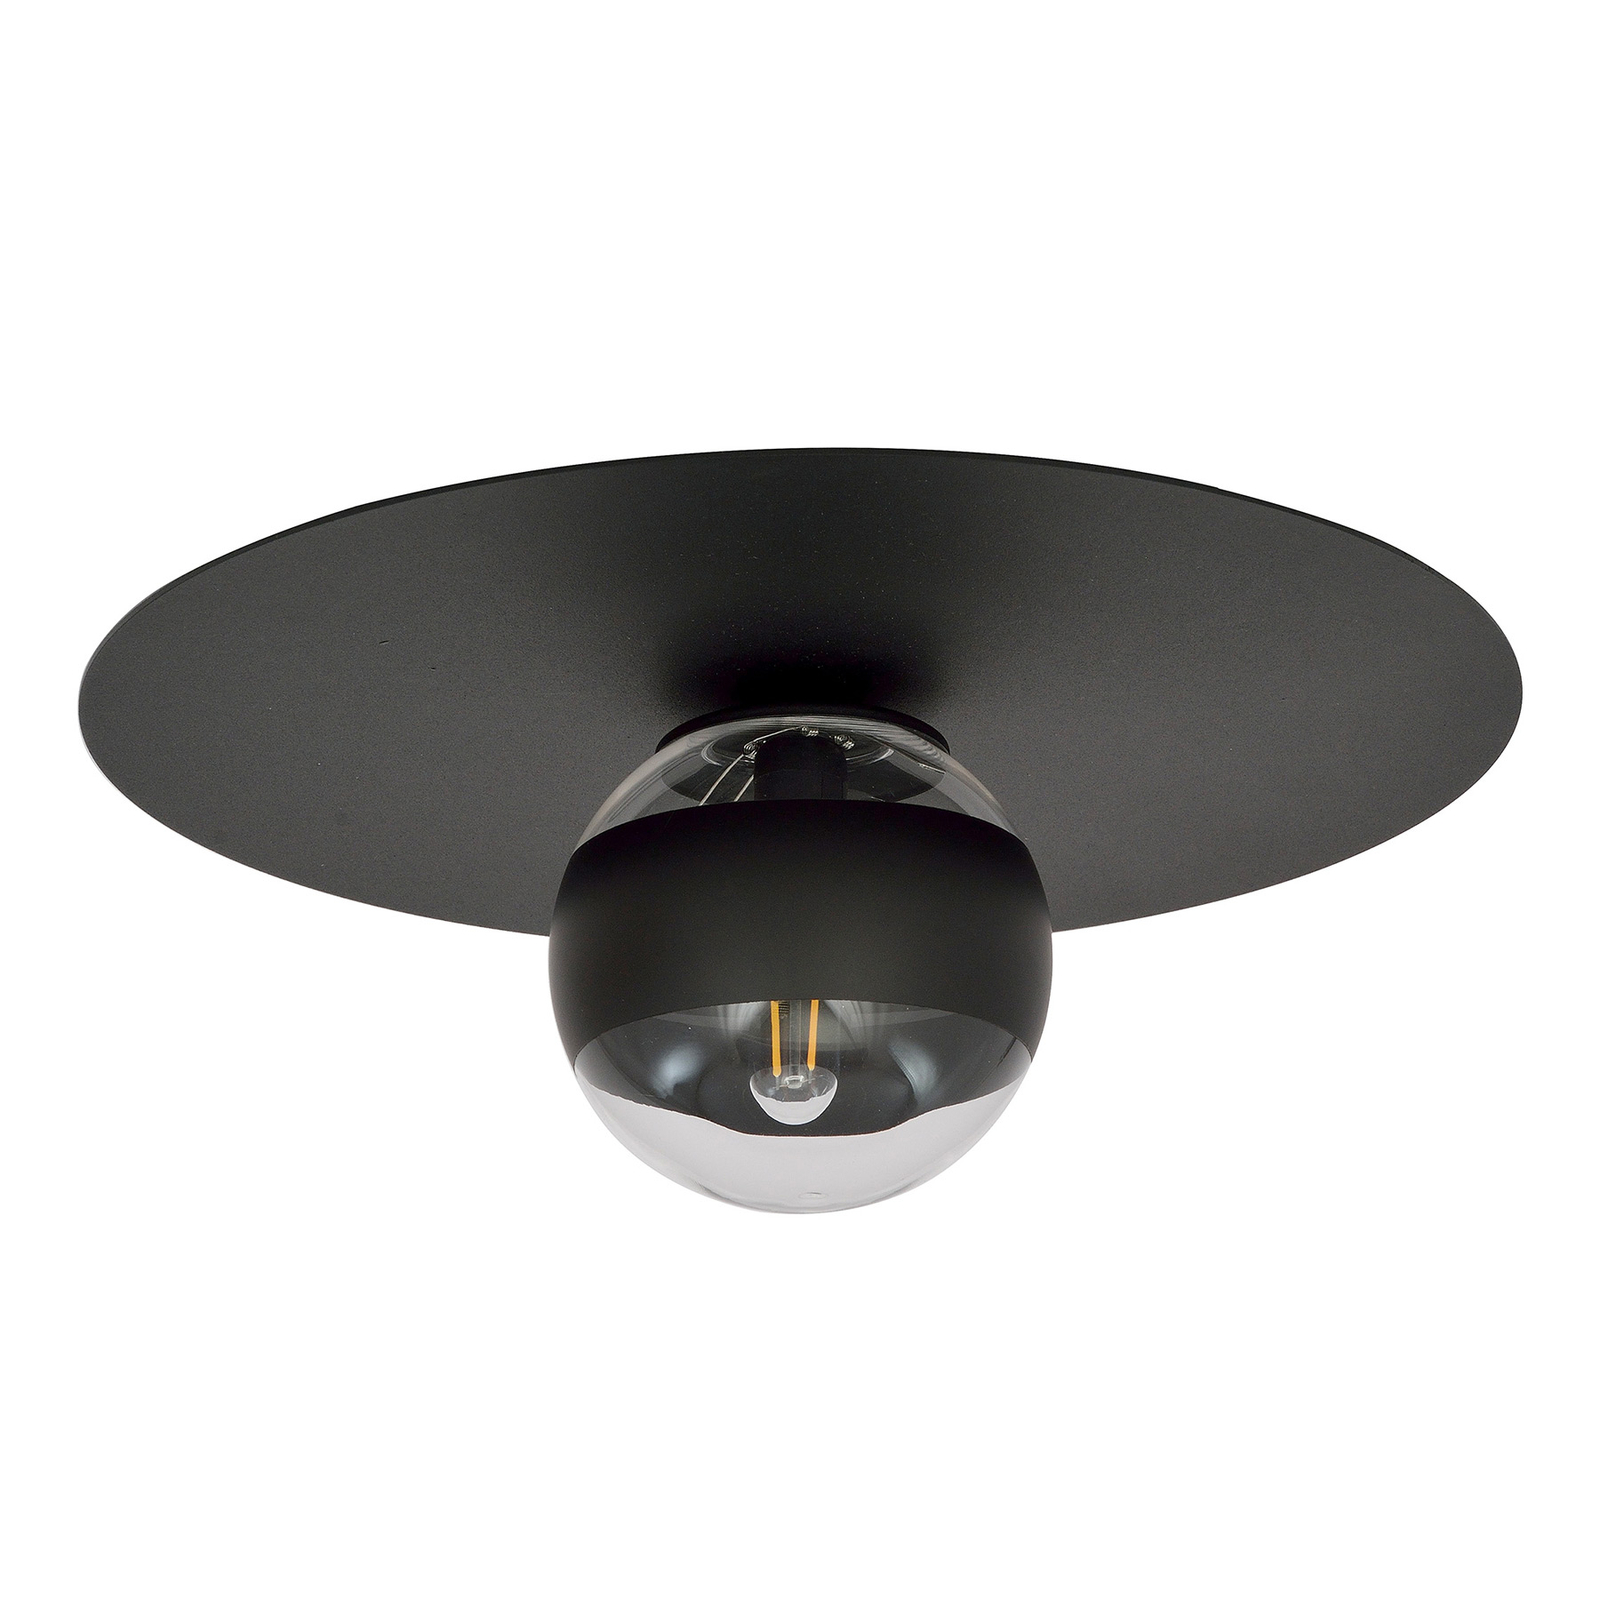 Kenzo plafondlamp, rond, zwart/helder, 1-lamp